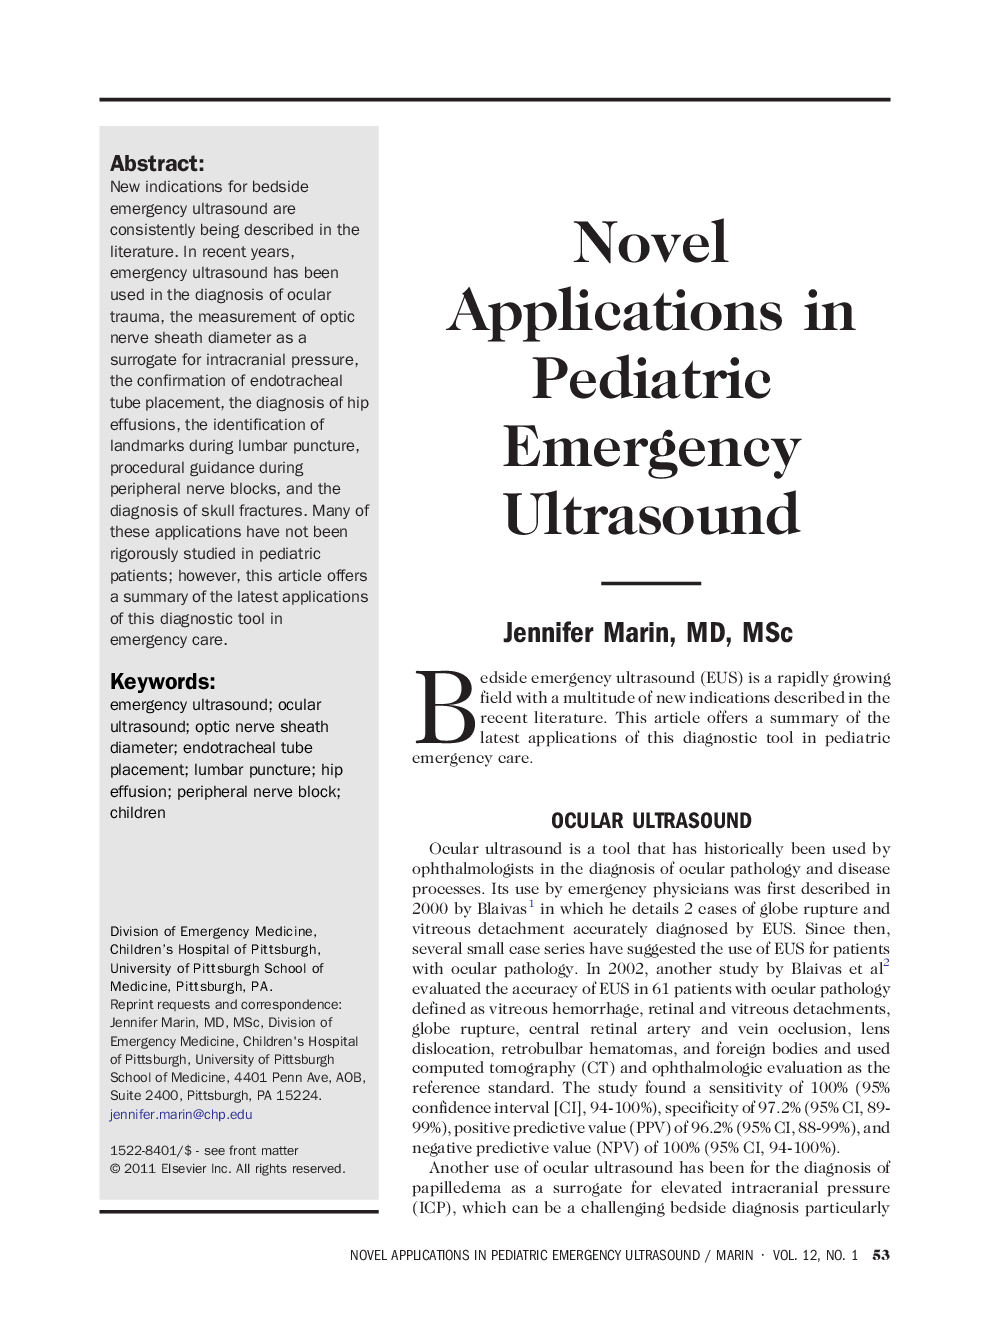 Novel Applications in Pediatric Emergency Ultrasound